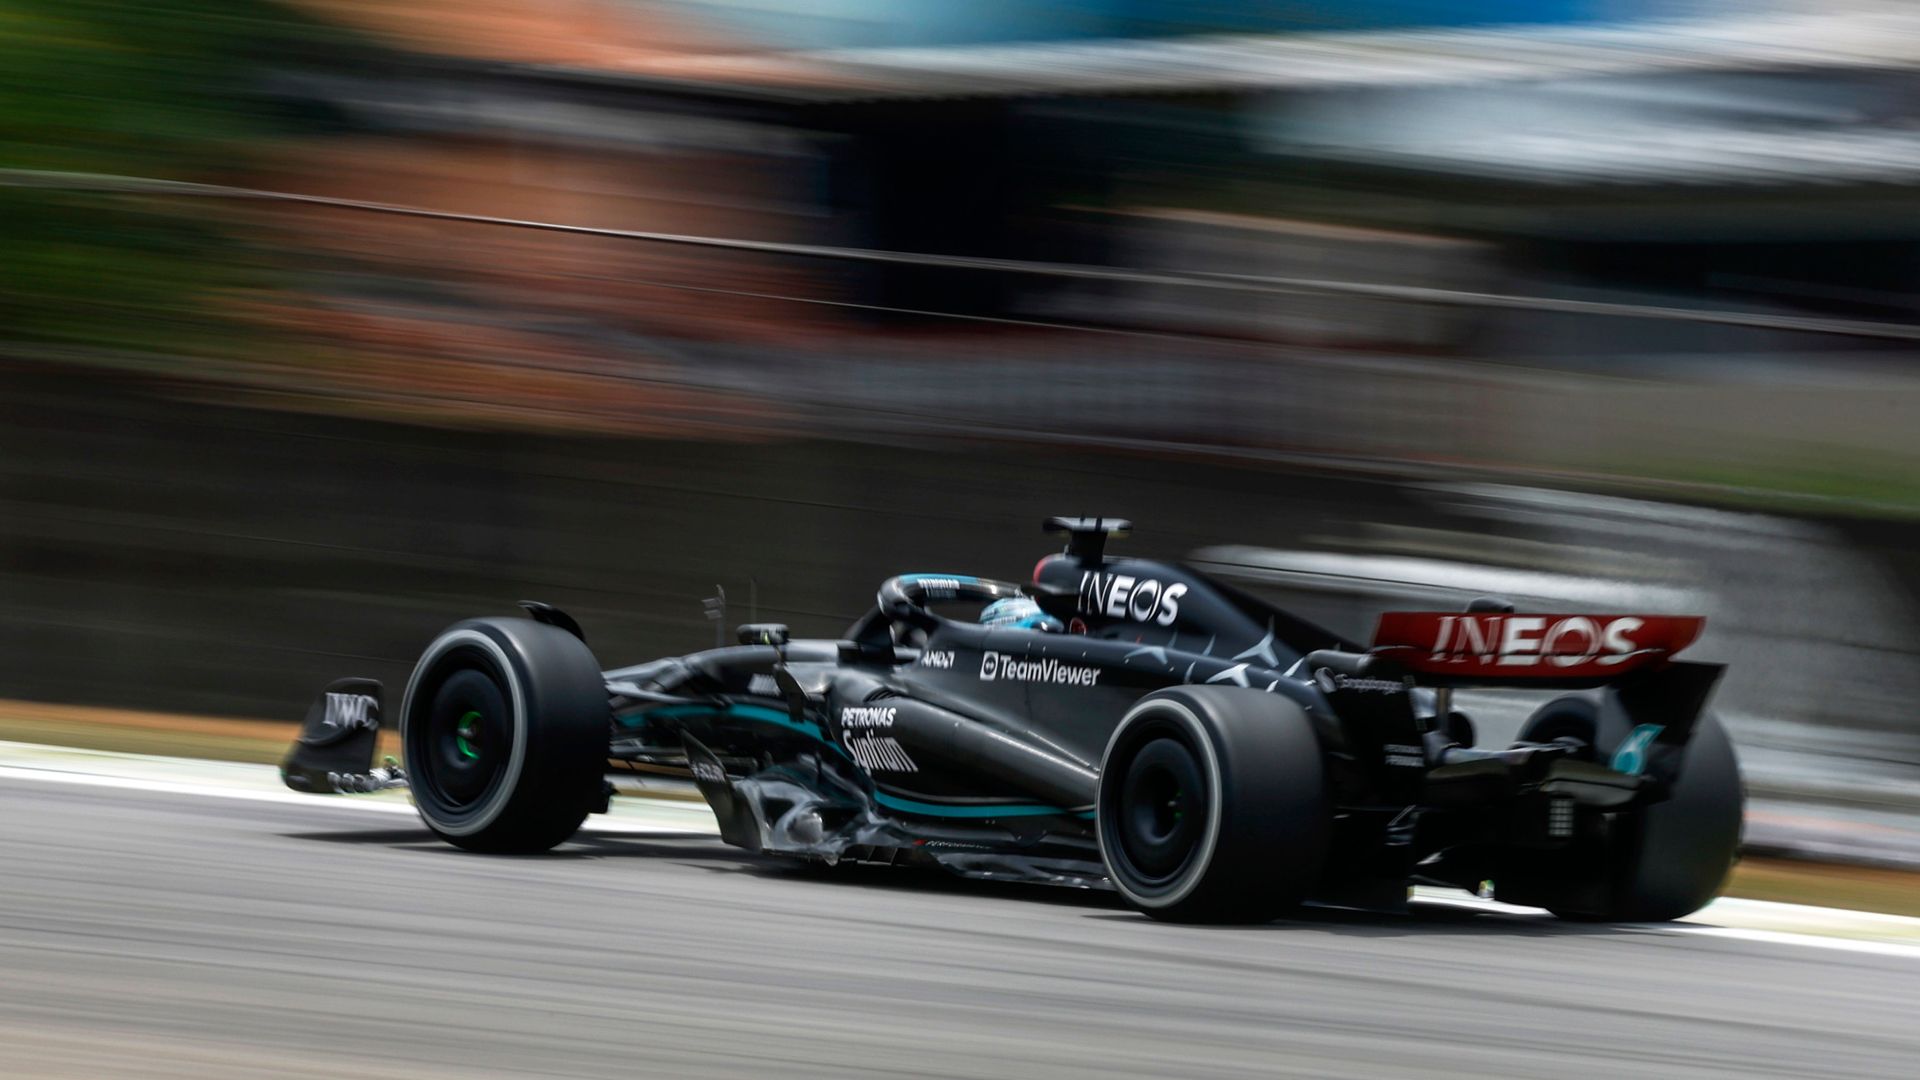 Sao Paulo GP: Who's looking fast ahead of tonight's qualifying?